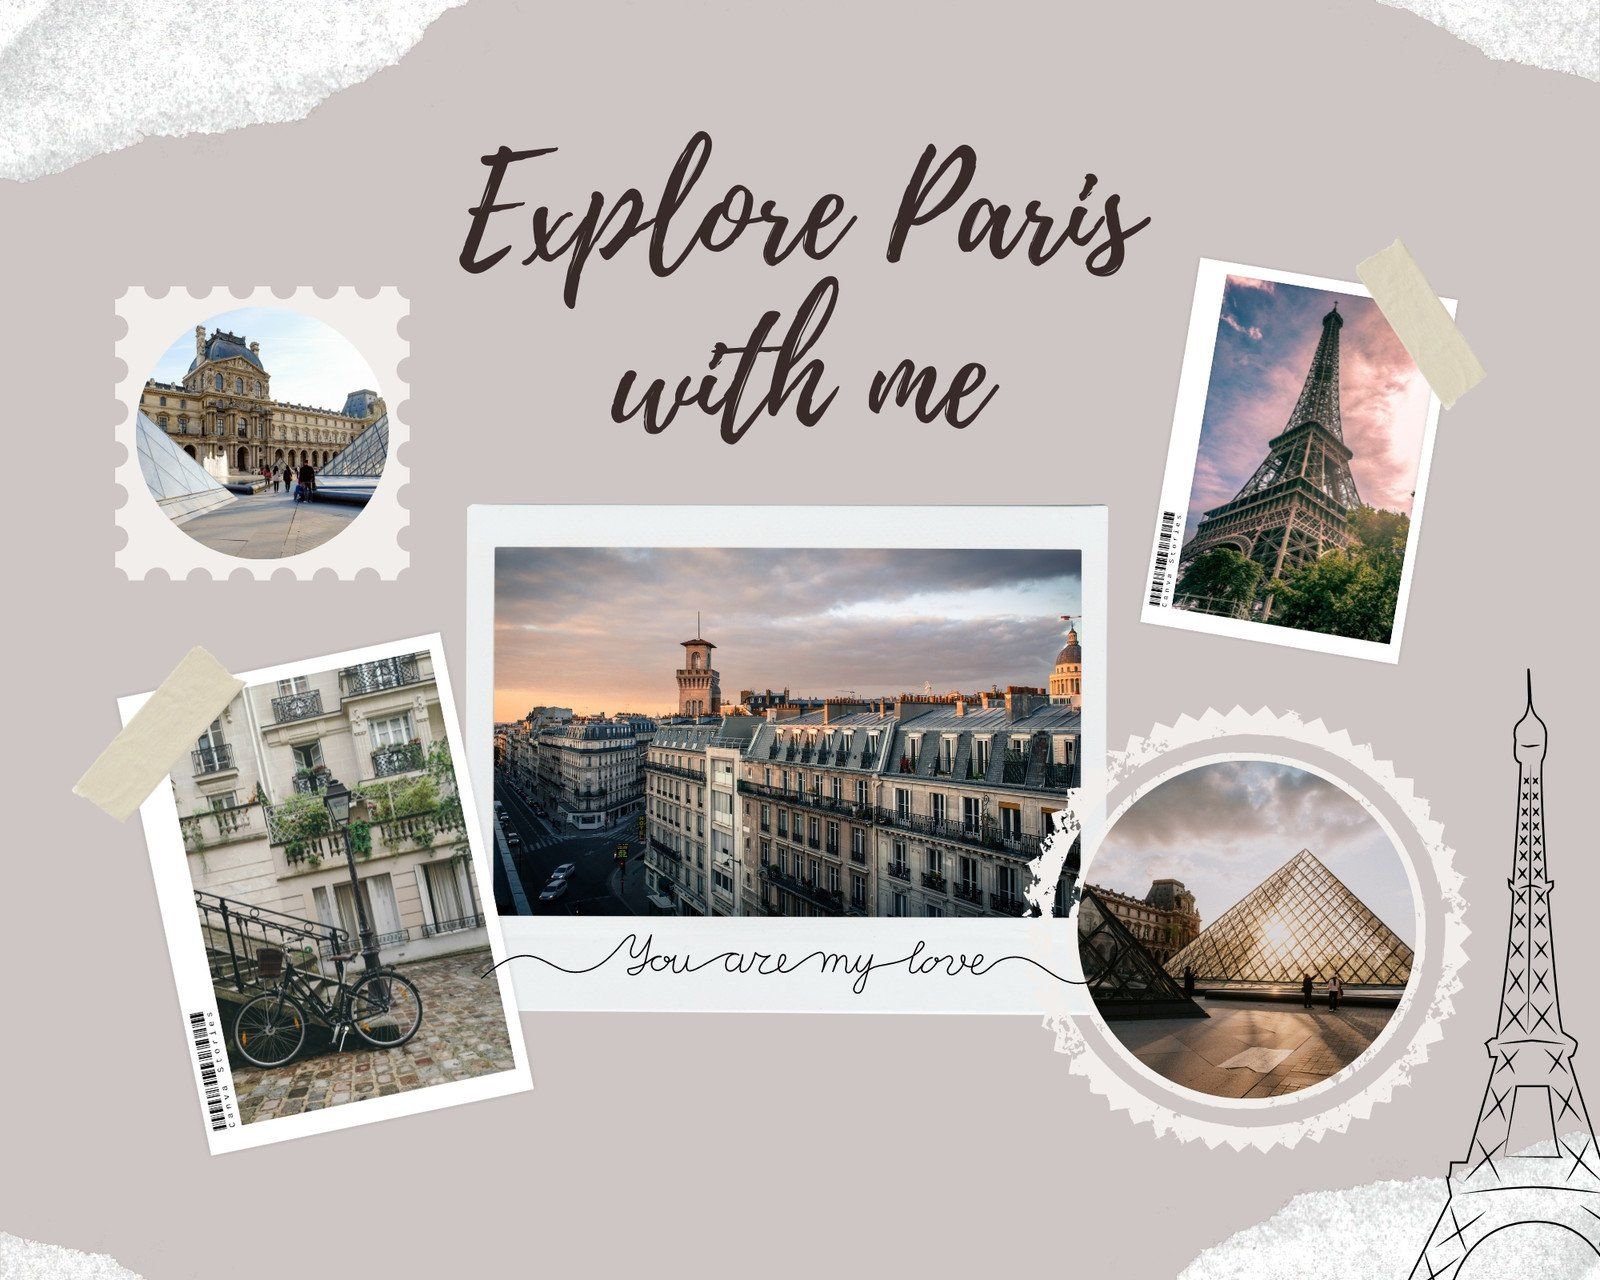 Explore Paris with me, you are my love - Paris